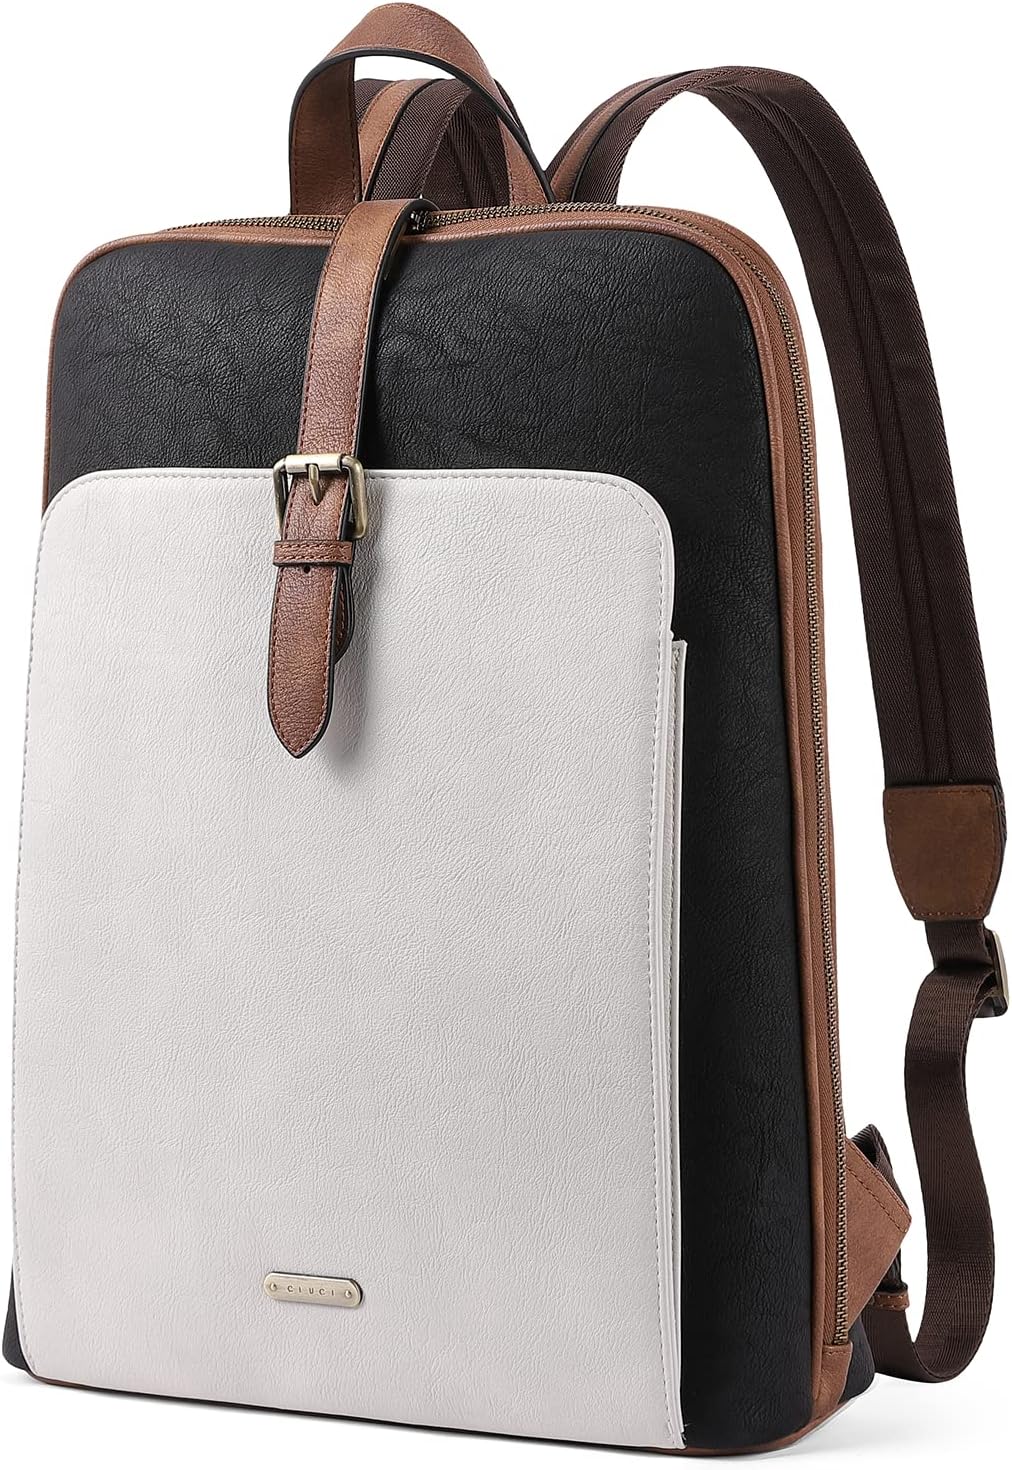 Buy Executive Laptop Bag for women in India (Black) | Tan & Loom